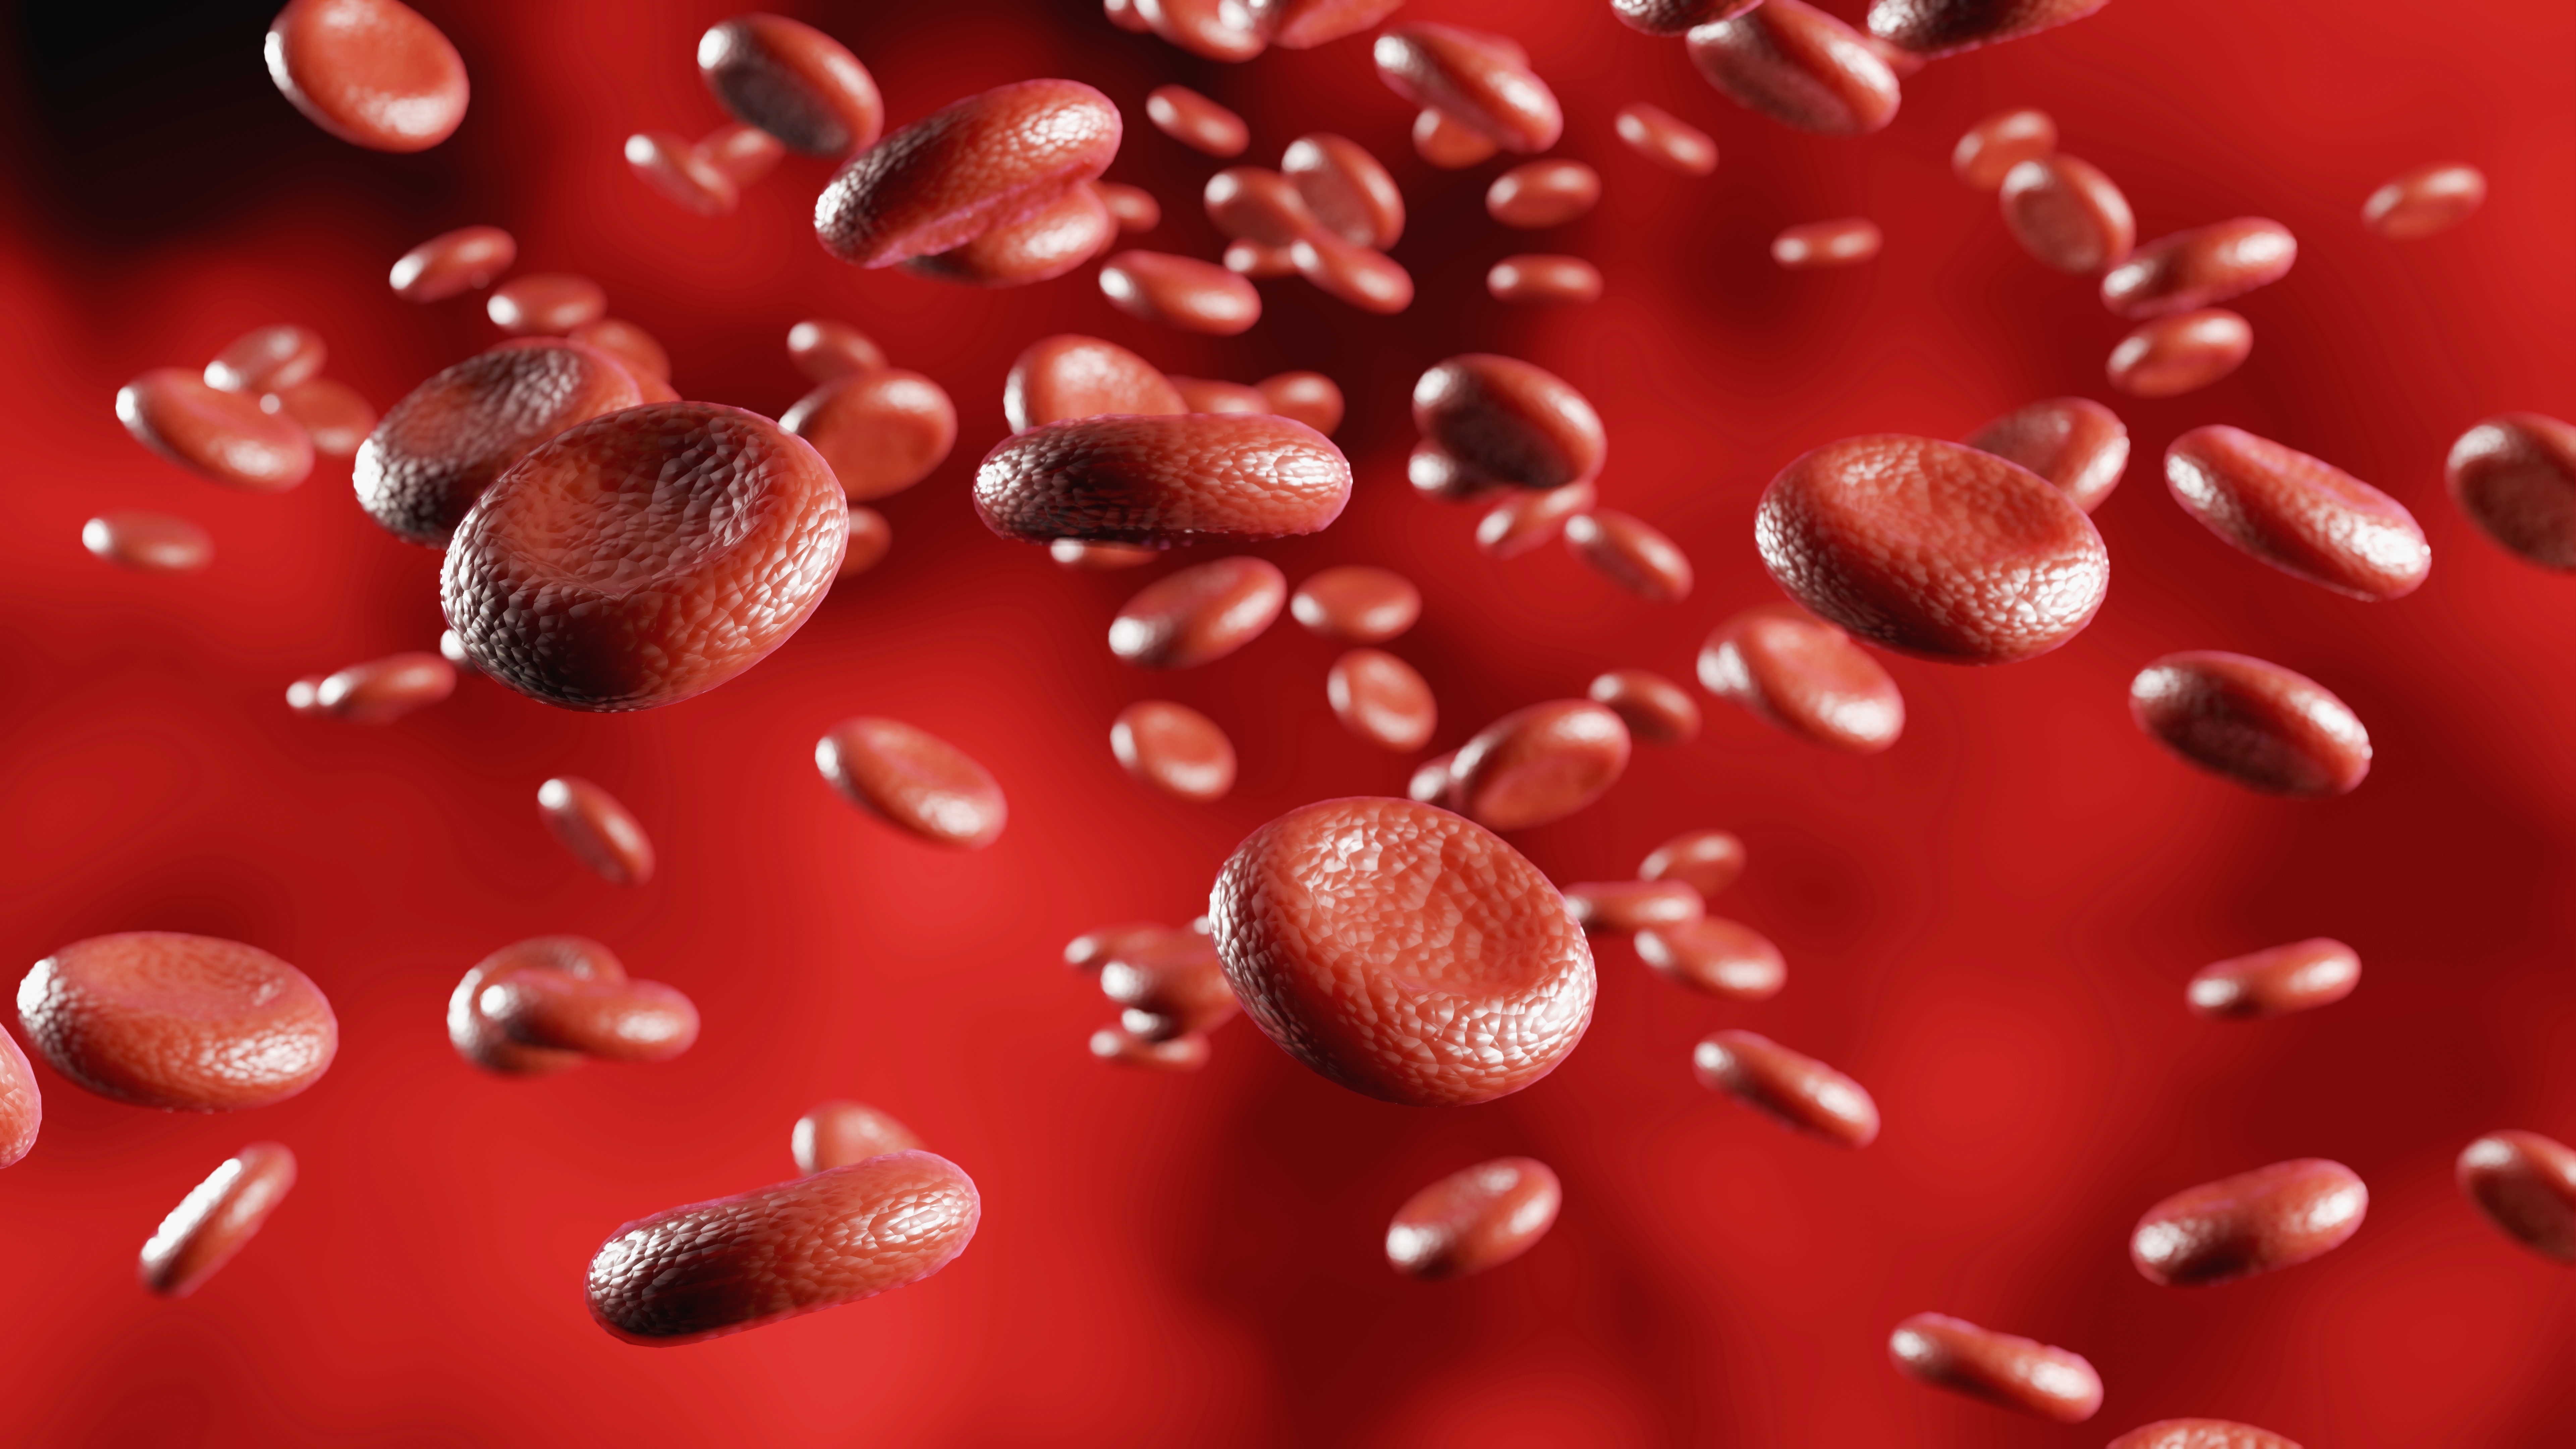 blood cells Moving flow, Hemoglobin Cells in vein, 3D rendering